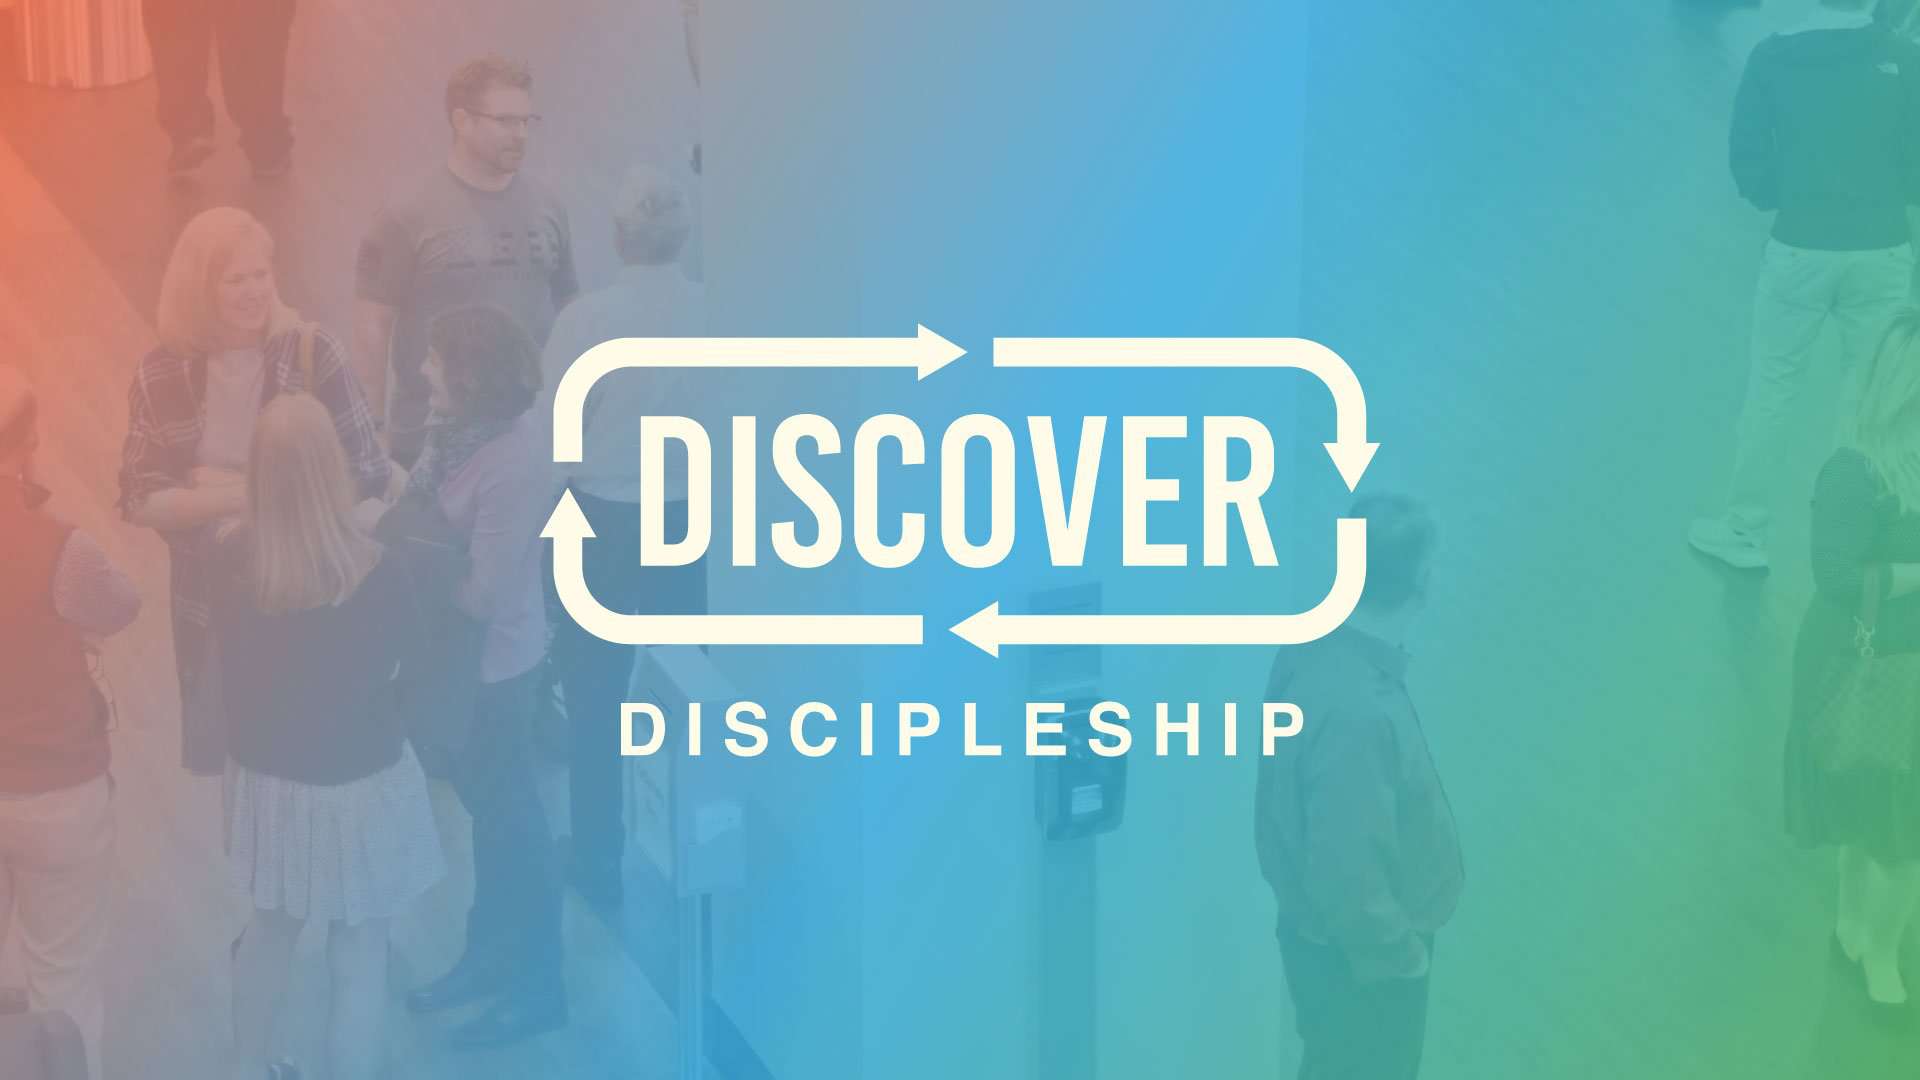 The Purpose of Discipleship